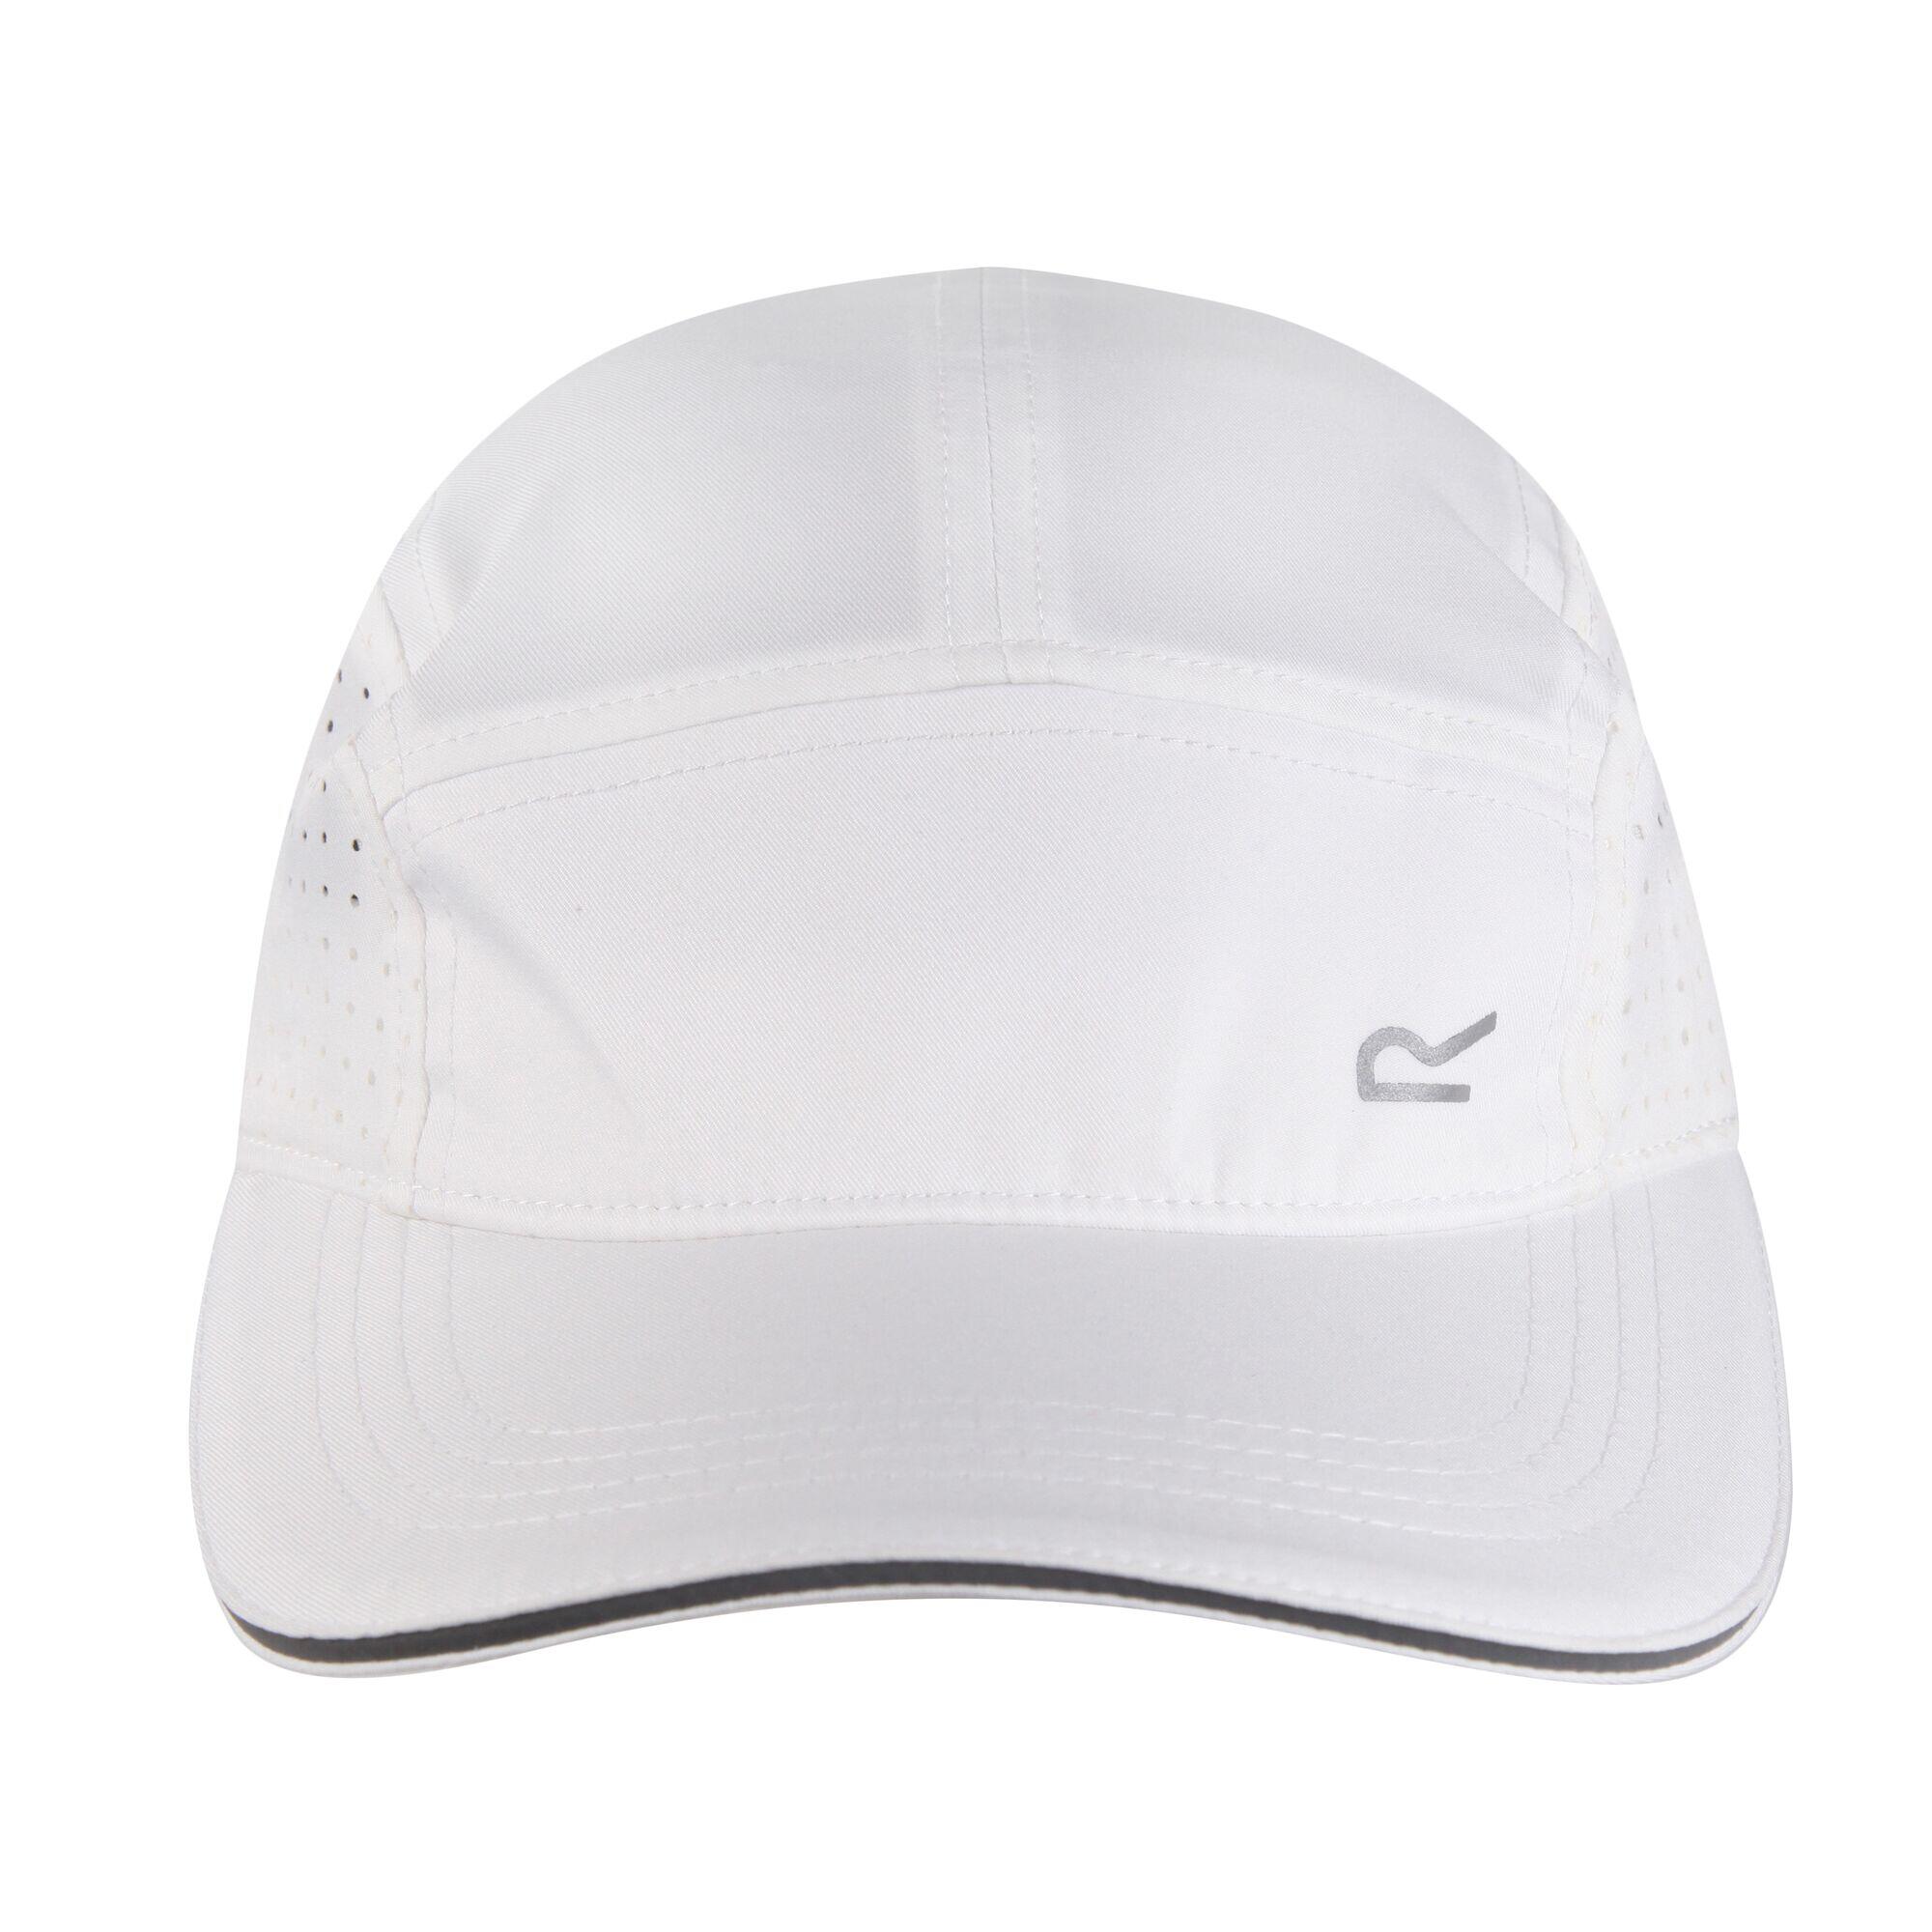 Unisex Adult Active Cap (White) 1/5